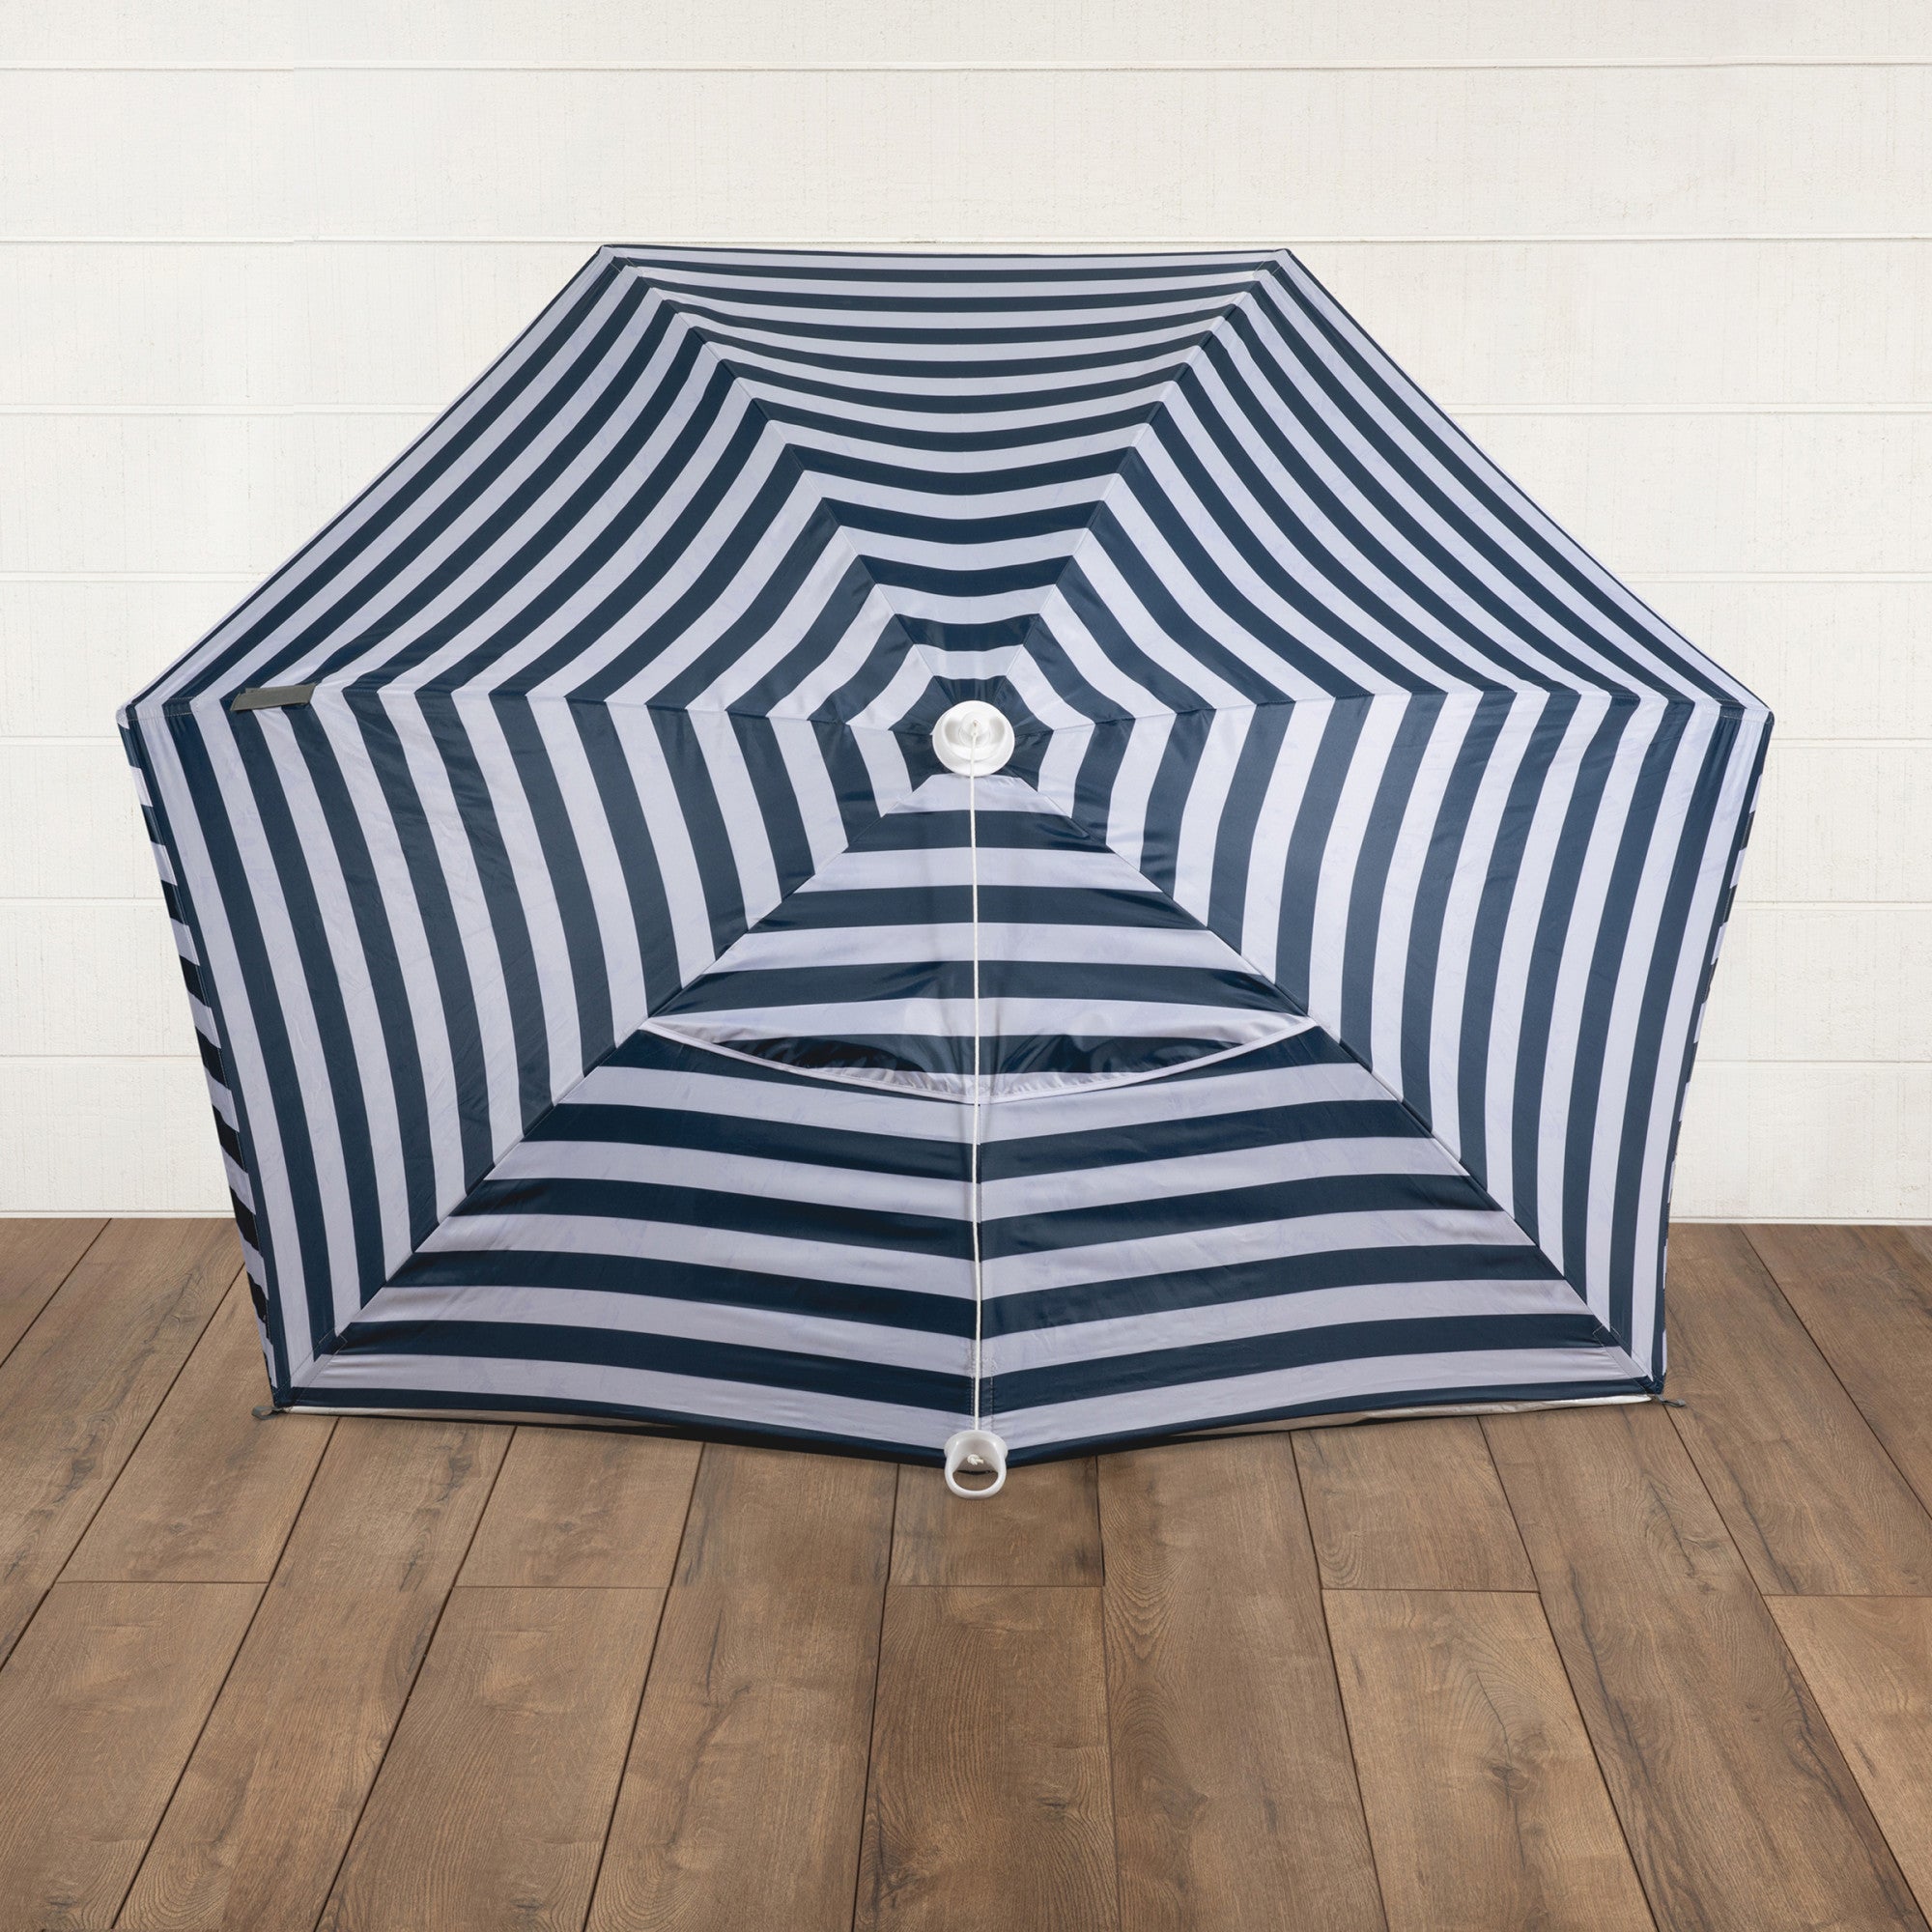 Brolly Beach Umbrella Tent